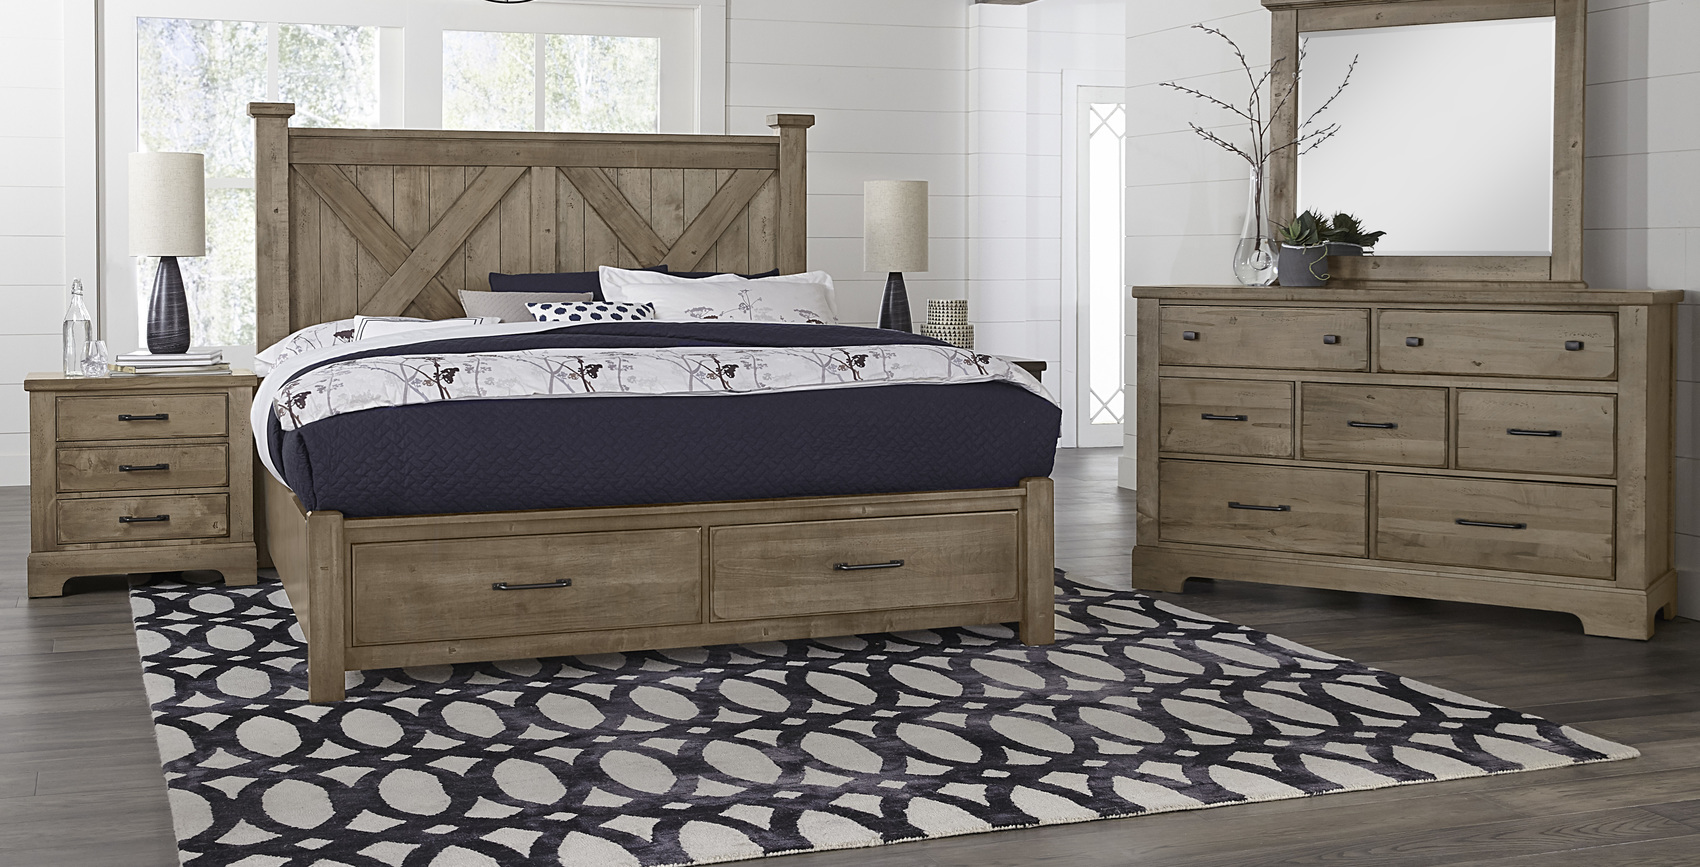 Artisan & Post:  Premium Solid Wood Bedrooms